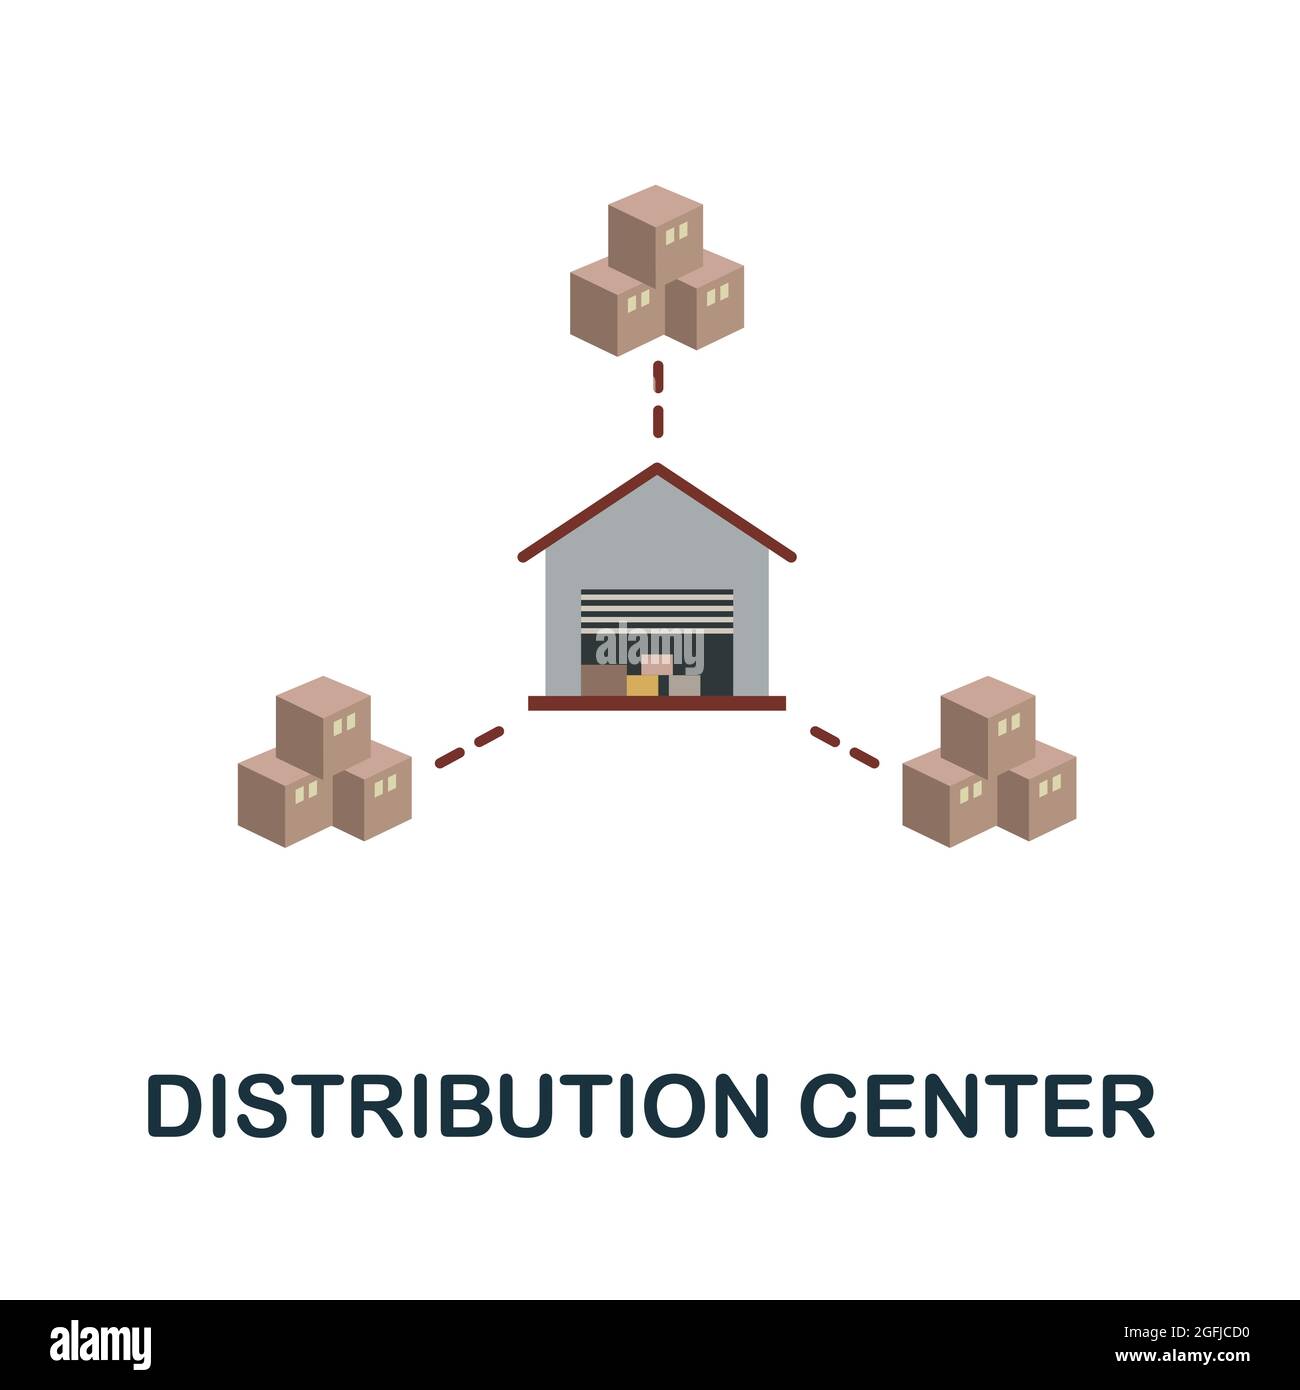 distribution center images